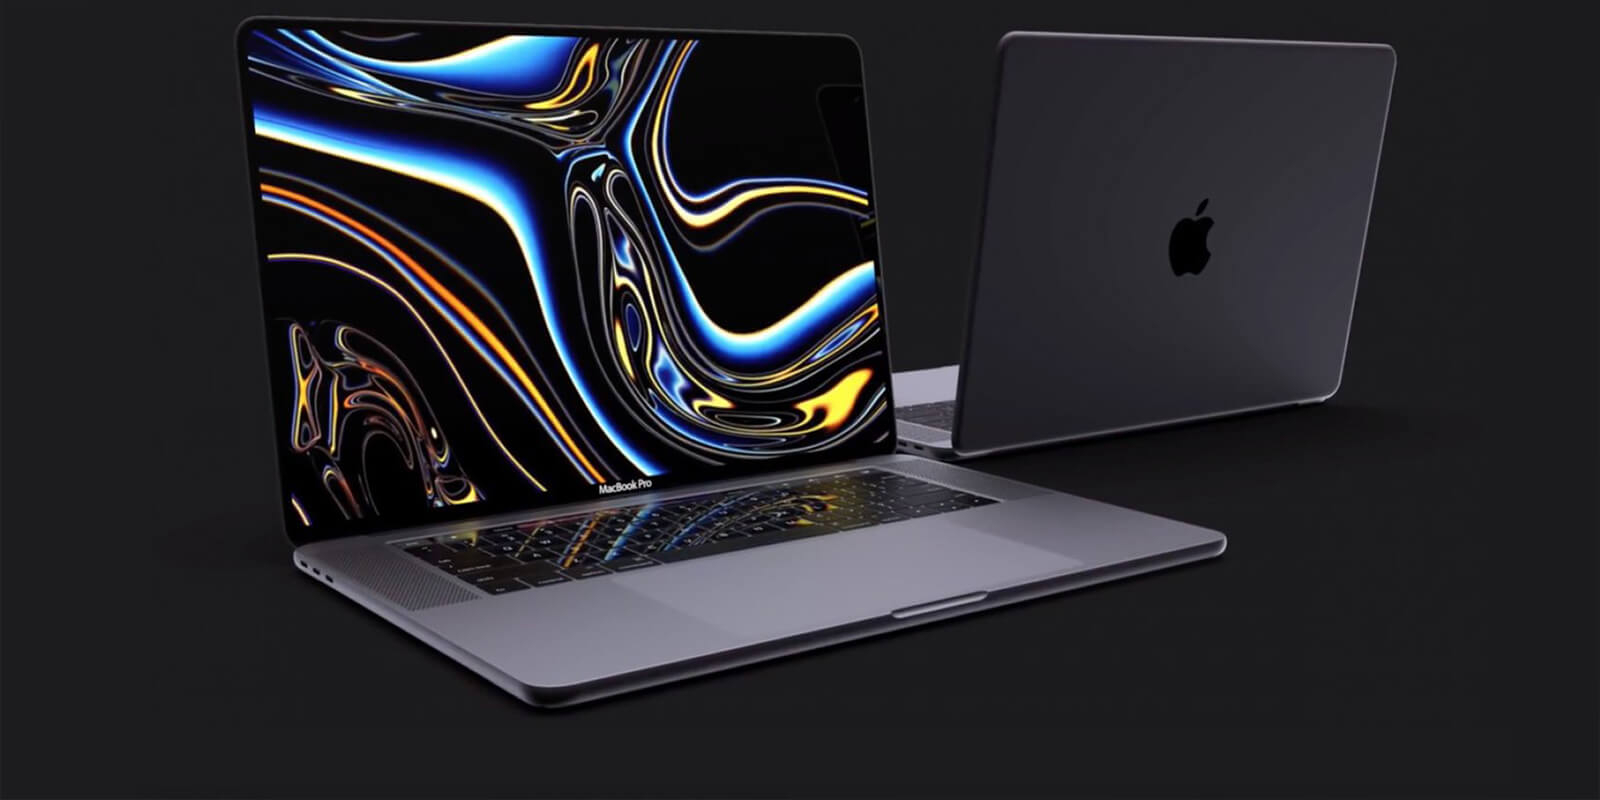 Apple MacBook Pro 16 Retina, Space Gray 1TB (MVVK2) 2019